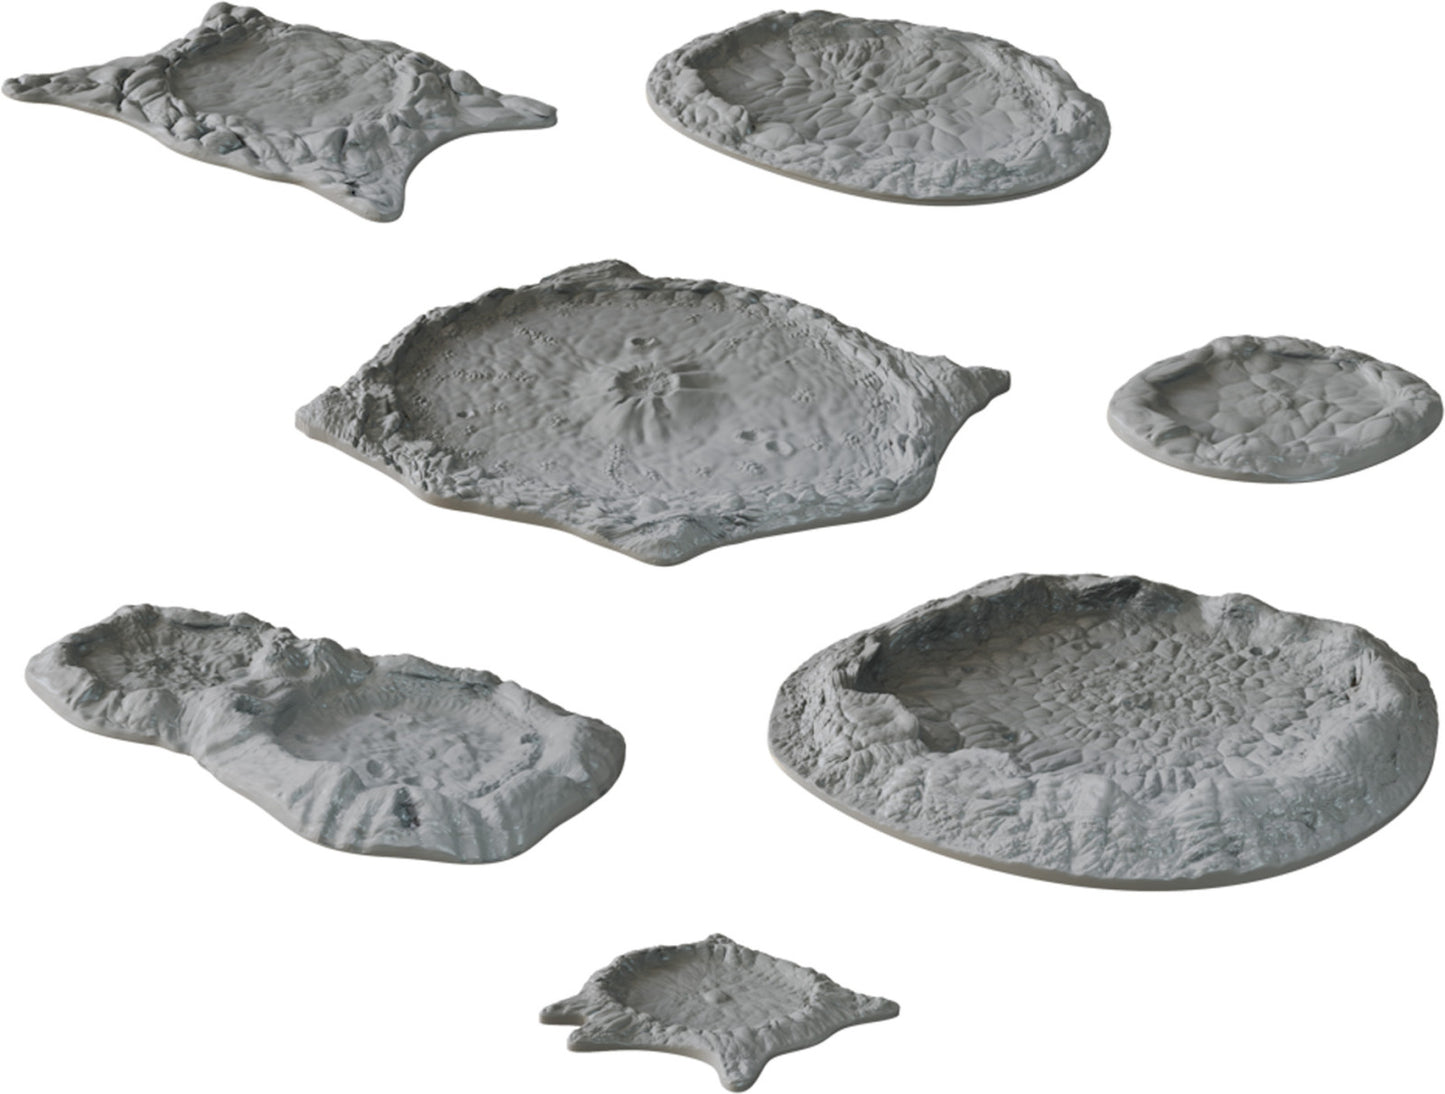 TerrainCrate Craters